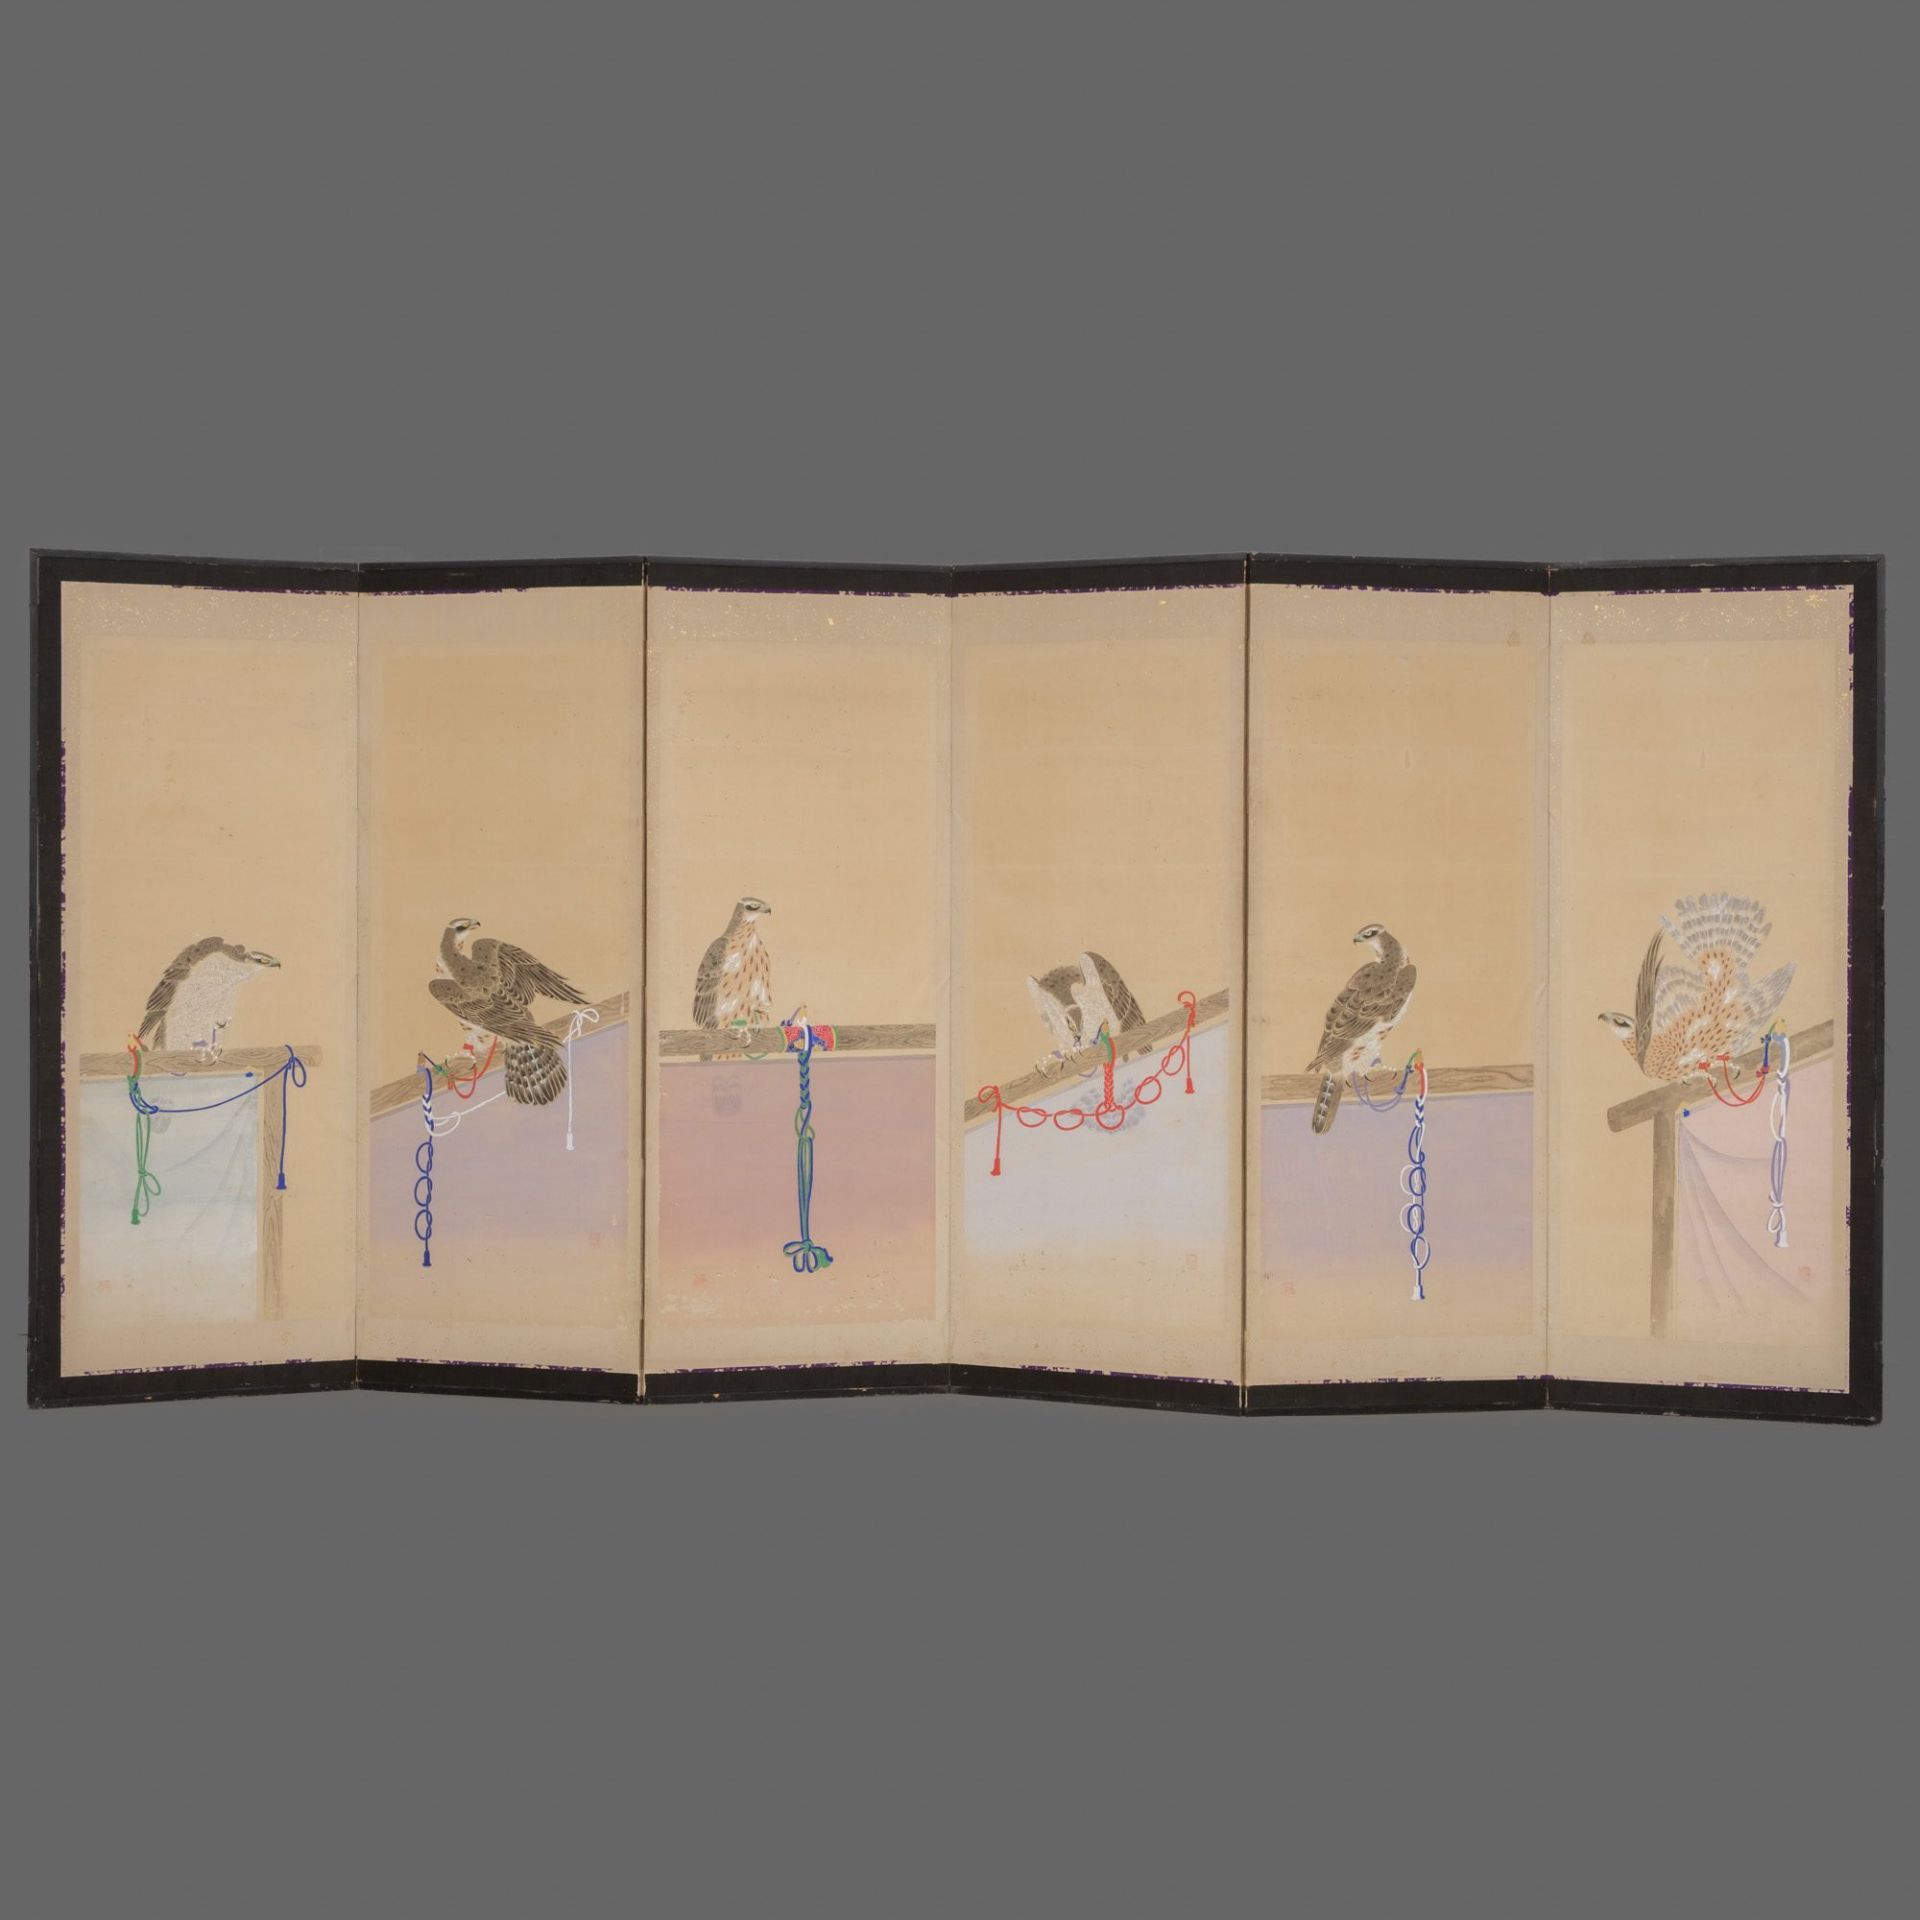 A LARGE JAPANESE SIX-PANEL SCREEN WITH HAWKS, FIRST HALF 19TH CENTURY (LATE EDO PERIOD) - Bild 2 aus 11